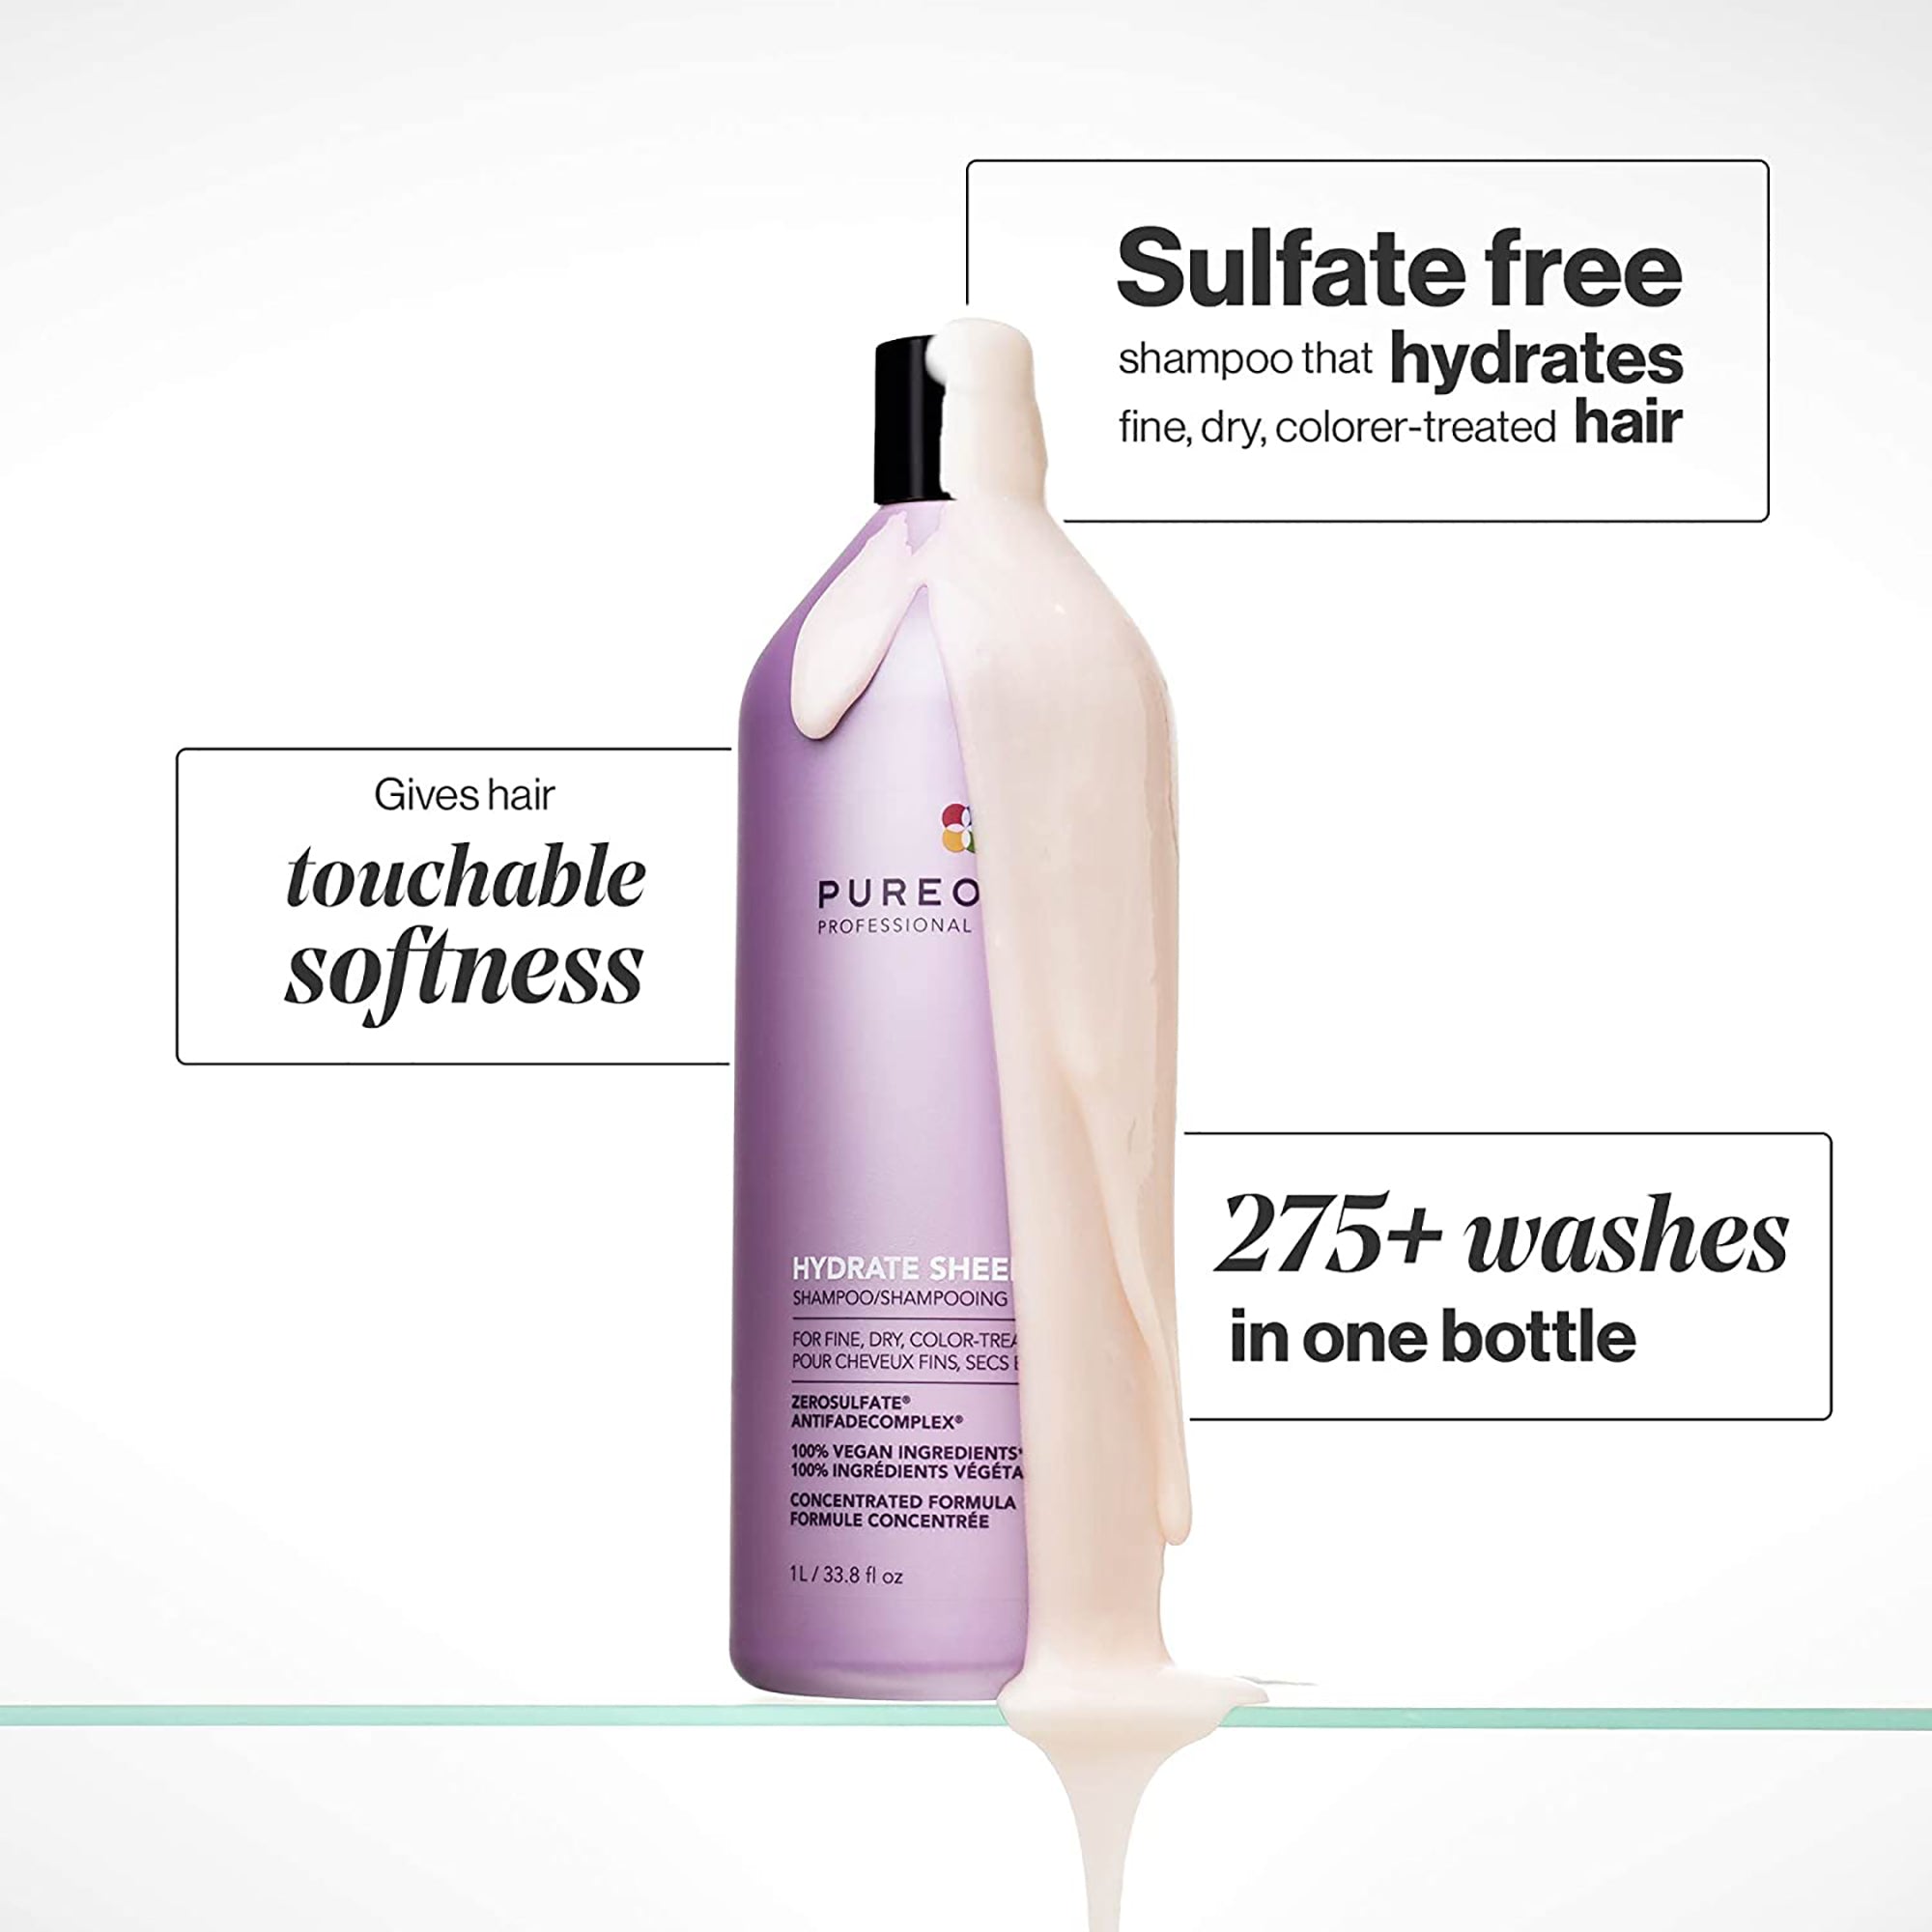 Pureology Hydrate Sheer Shampoo / 32 OZ